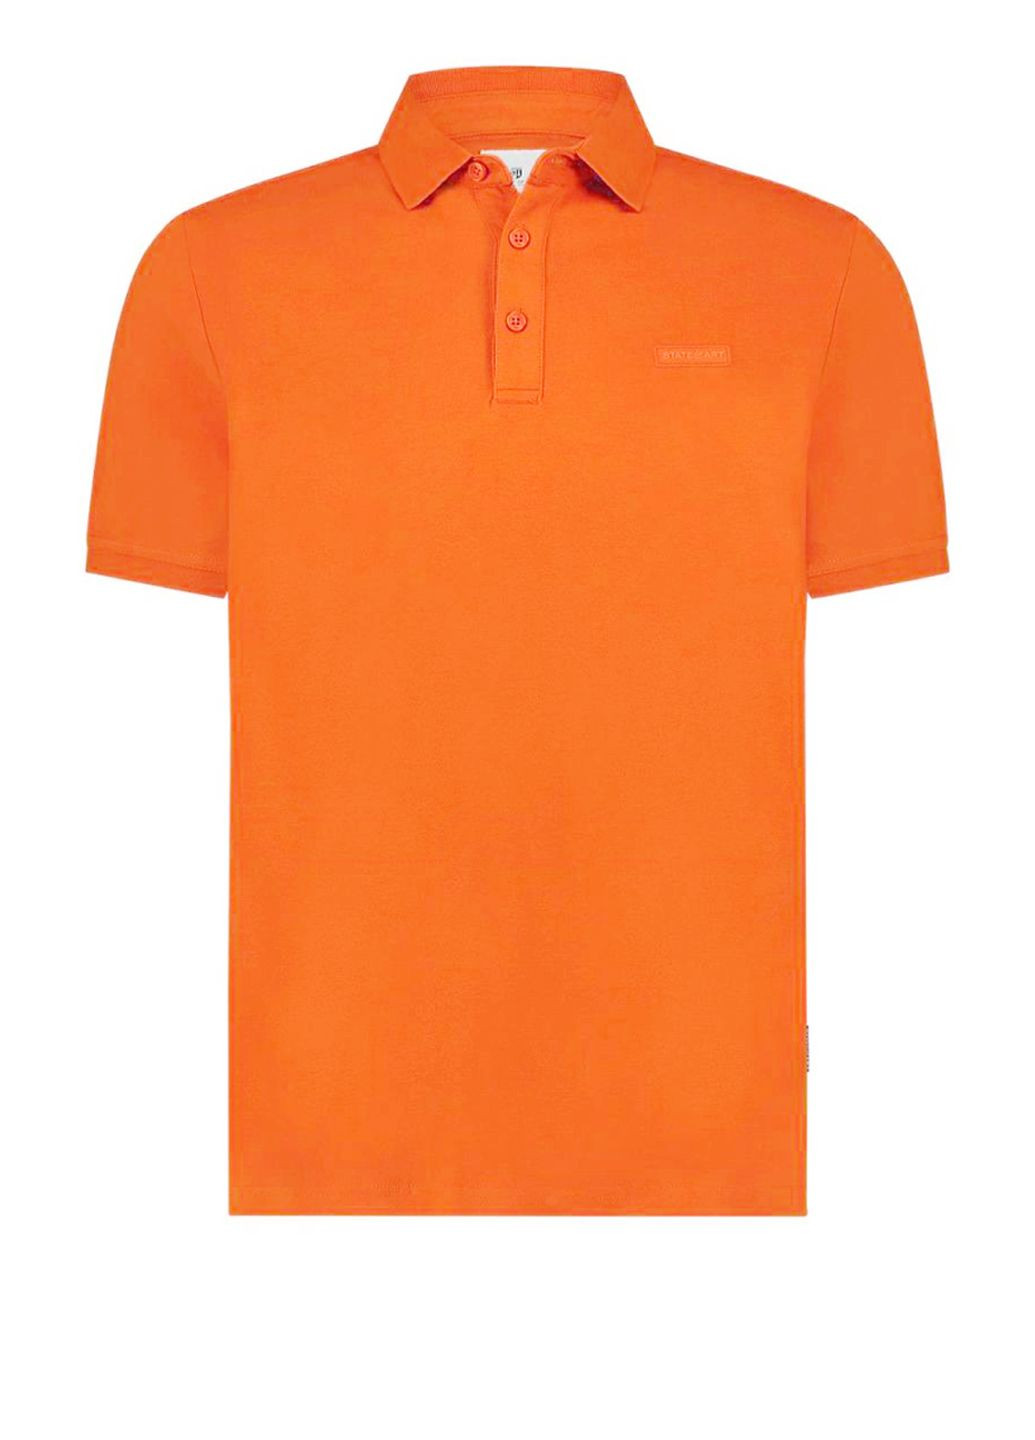 Оранжевая футболка-мужская оранжевая футболка-поло для мужчин State of Art однотонная